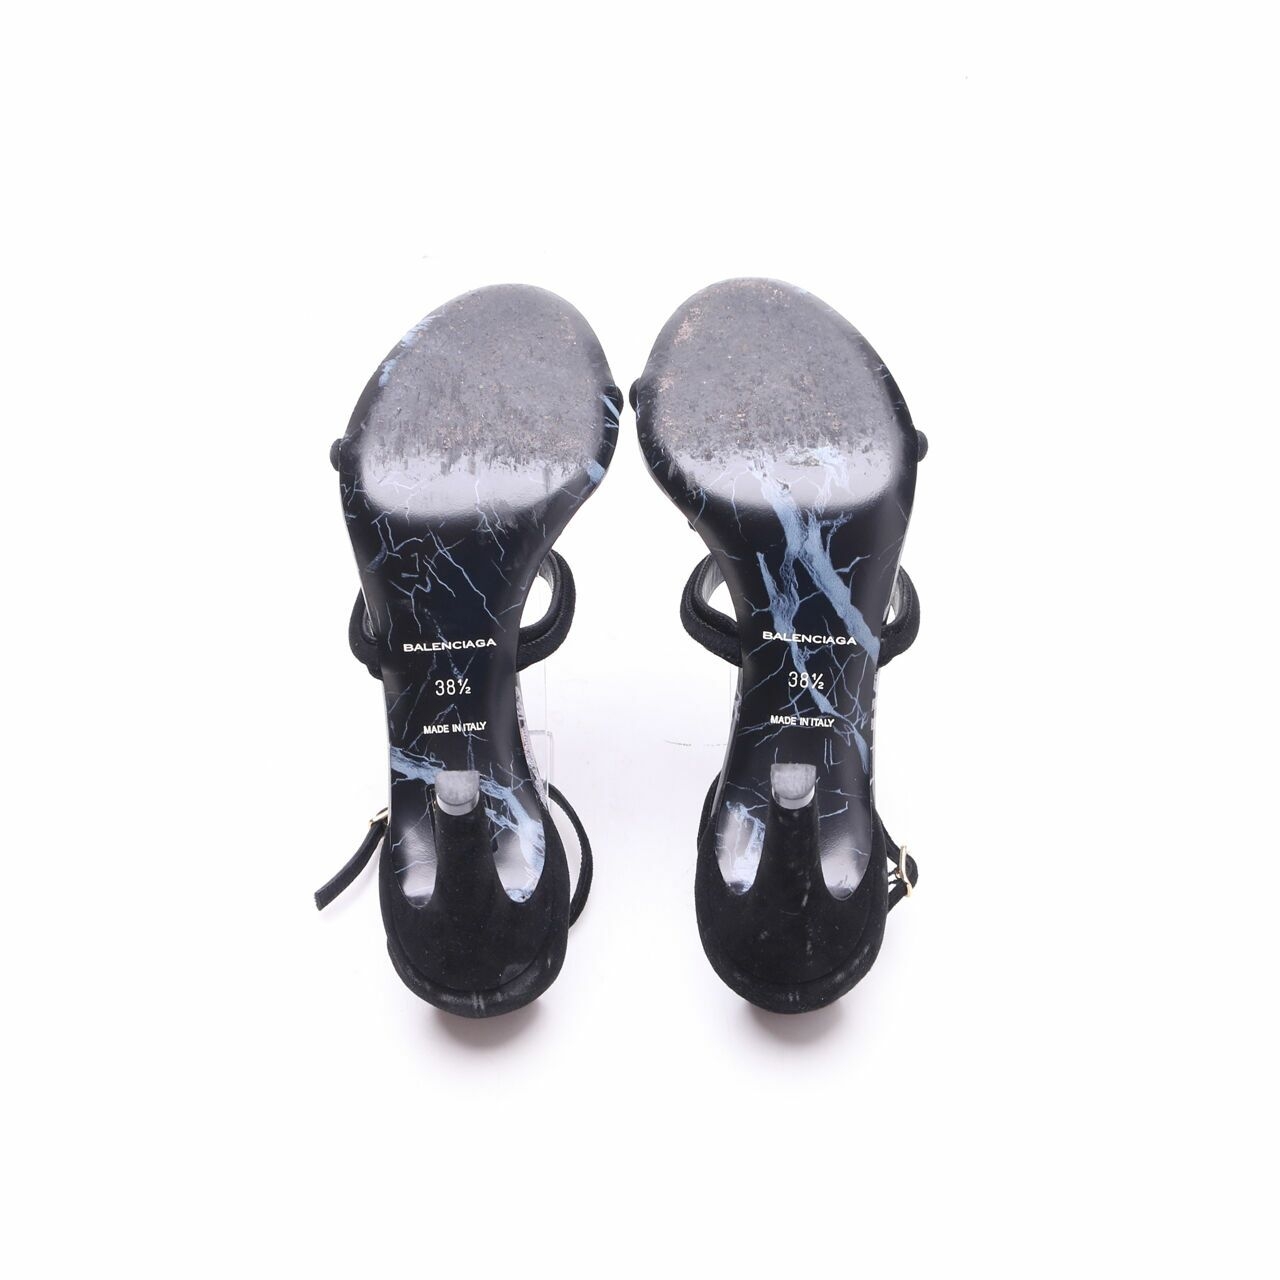 Balenciaga Black Suede Sling-back Open-toe Heels